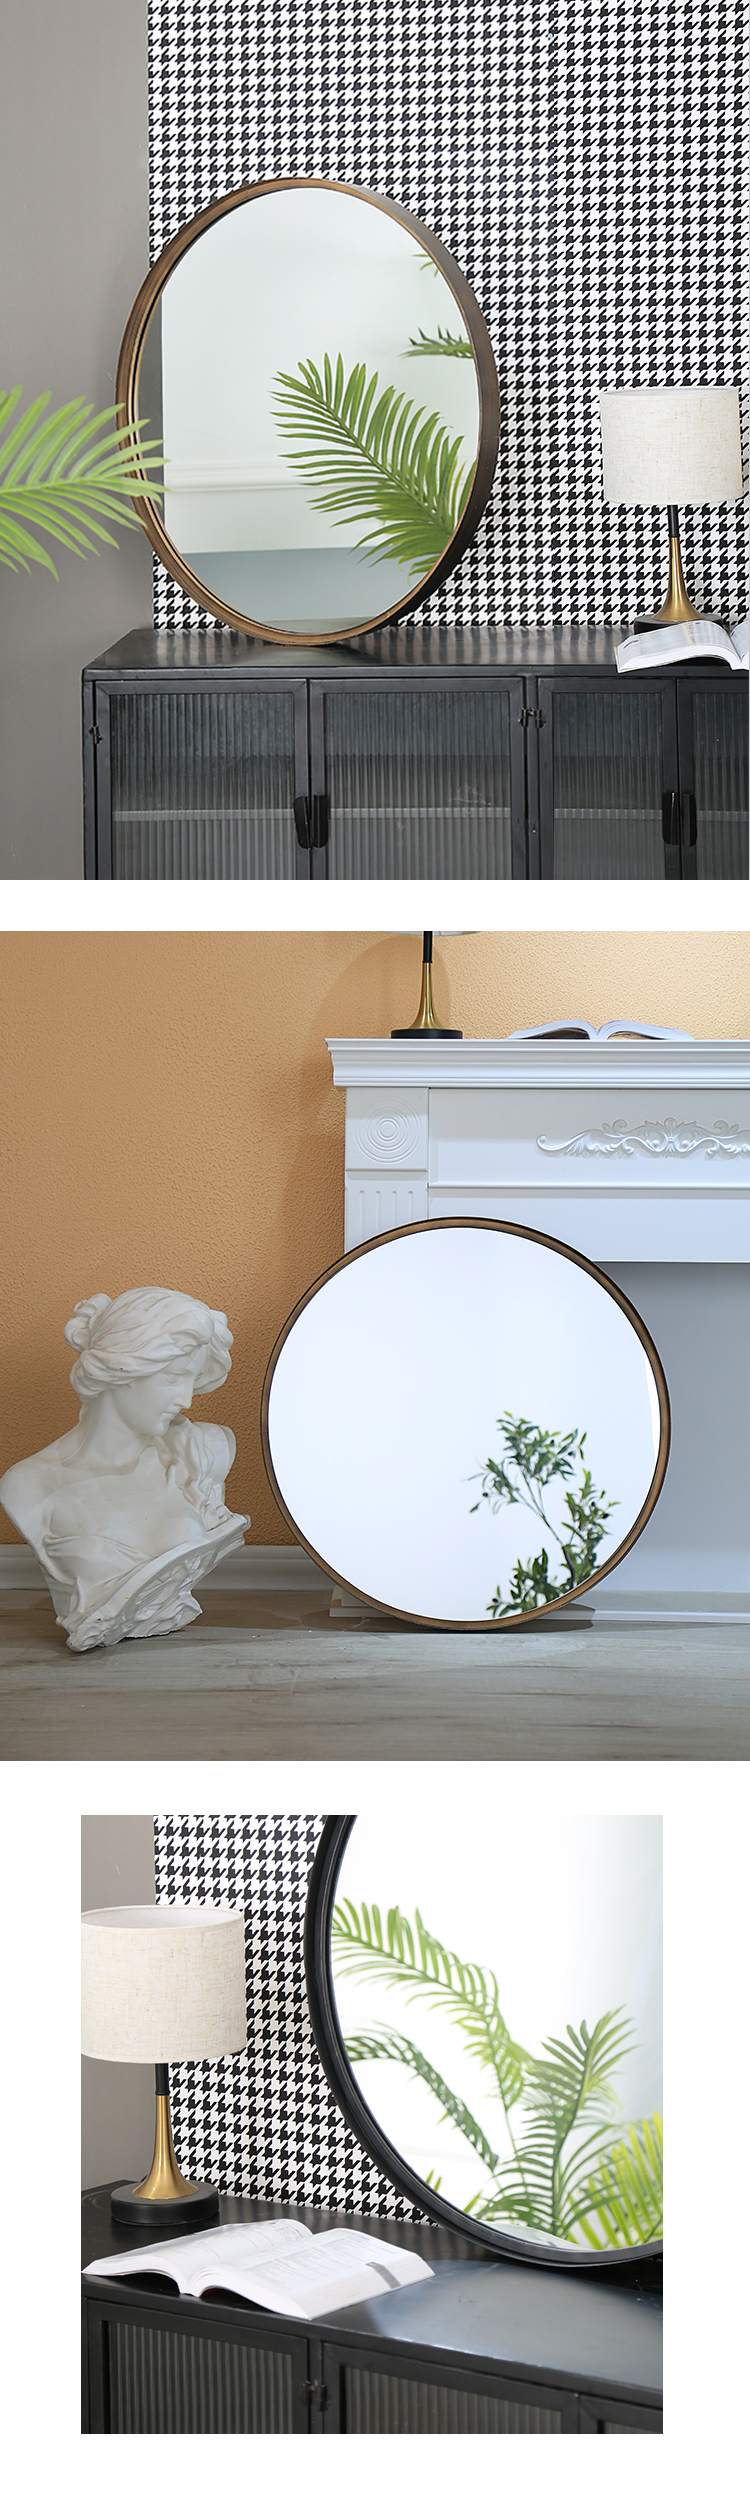 38316-Round wall mirror decor